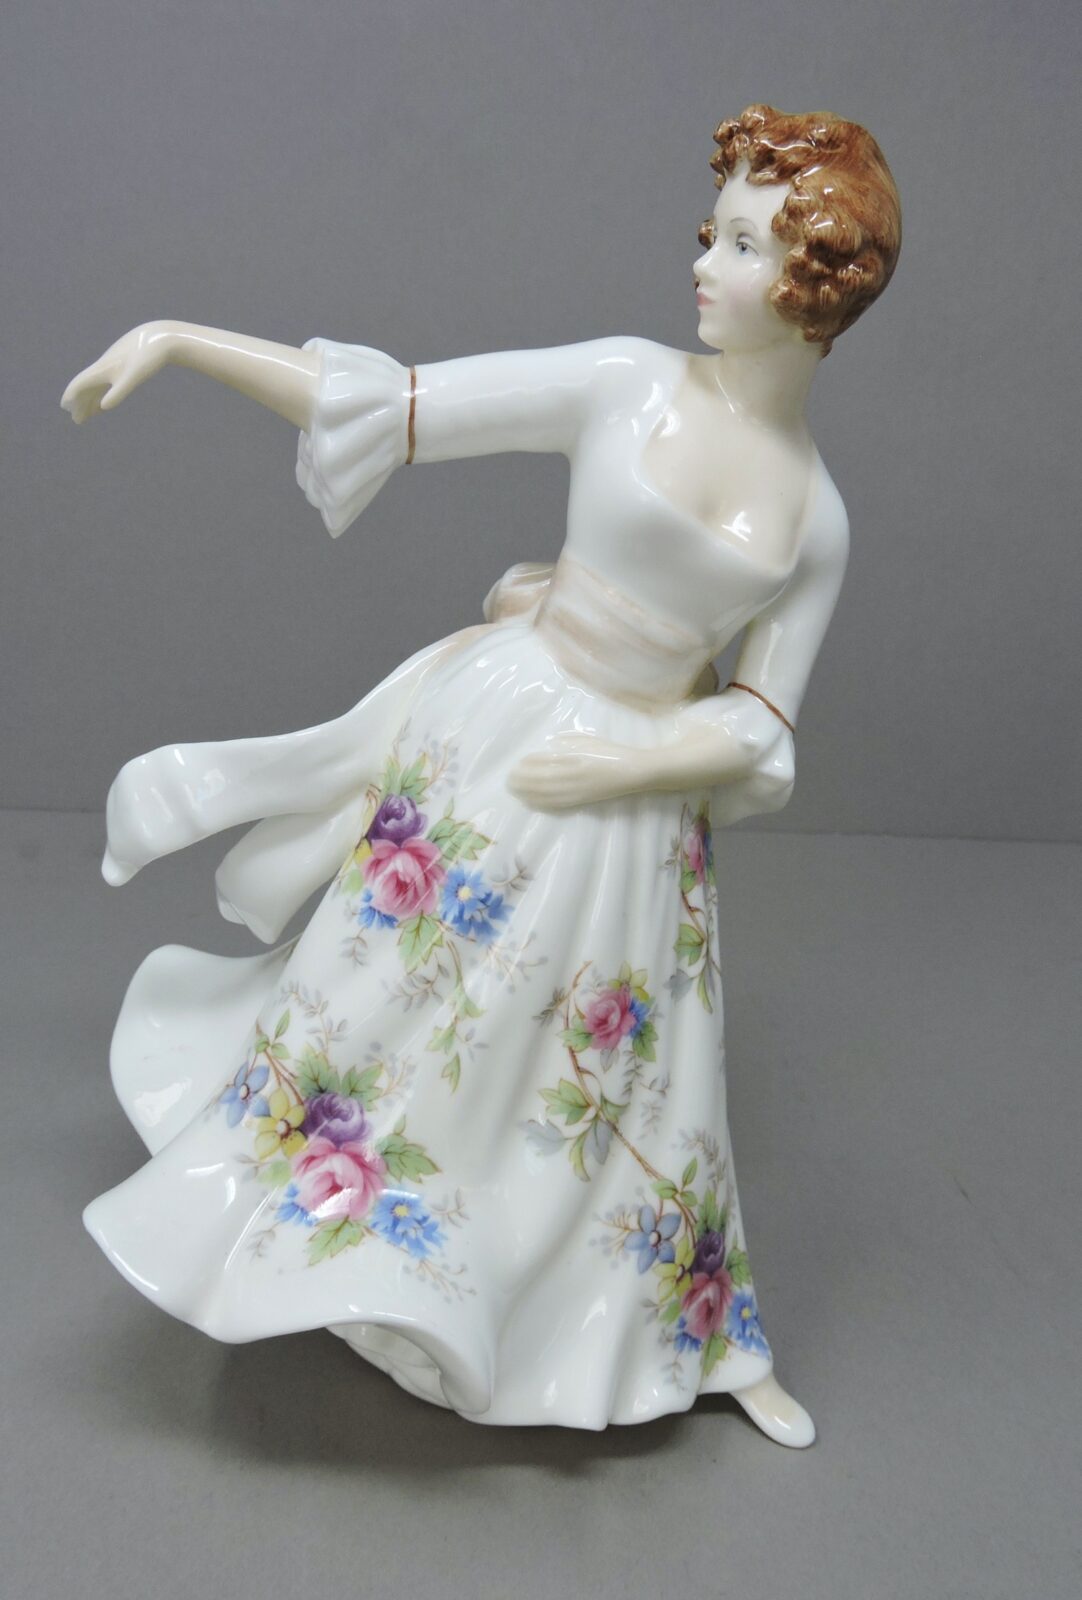 Royal Doulton Figurine of a Woman - Hazel - HN 3167 - 1988 to 1991 